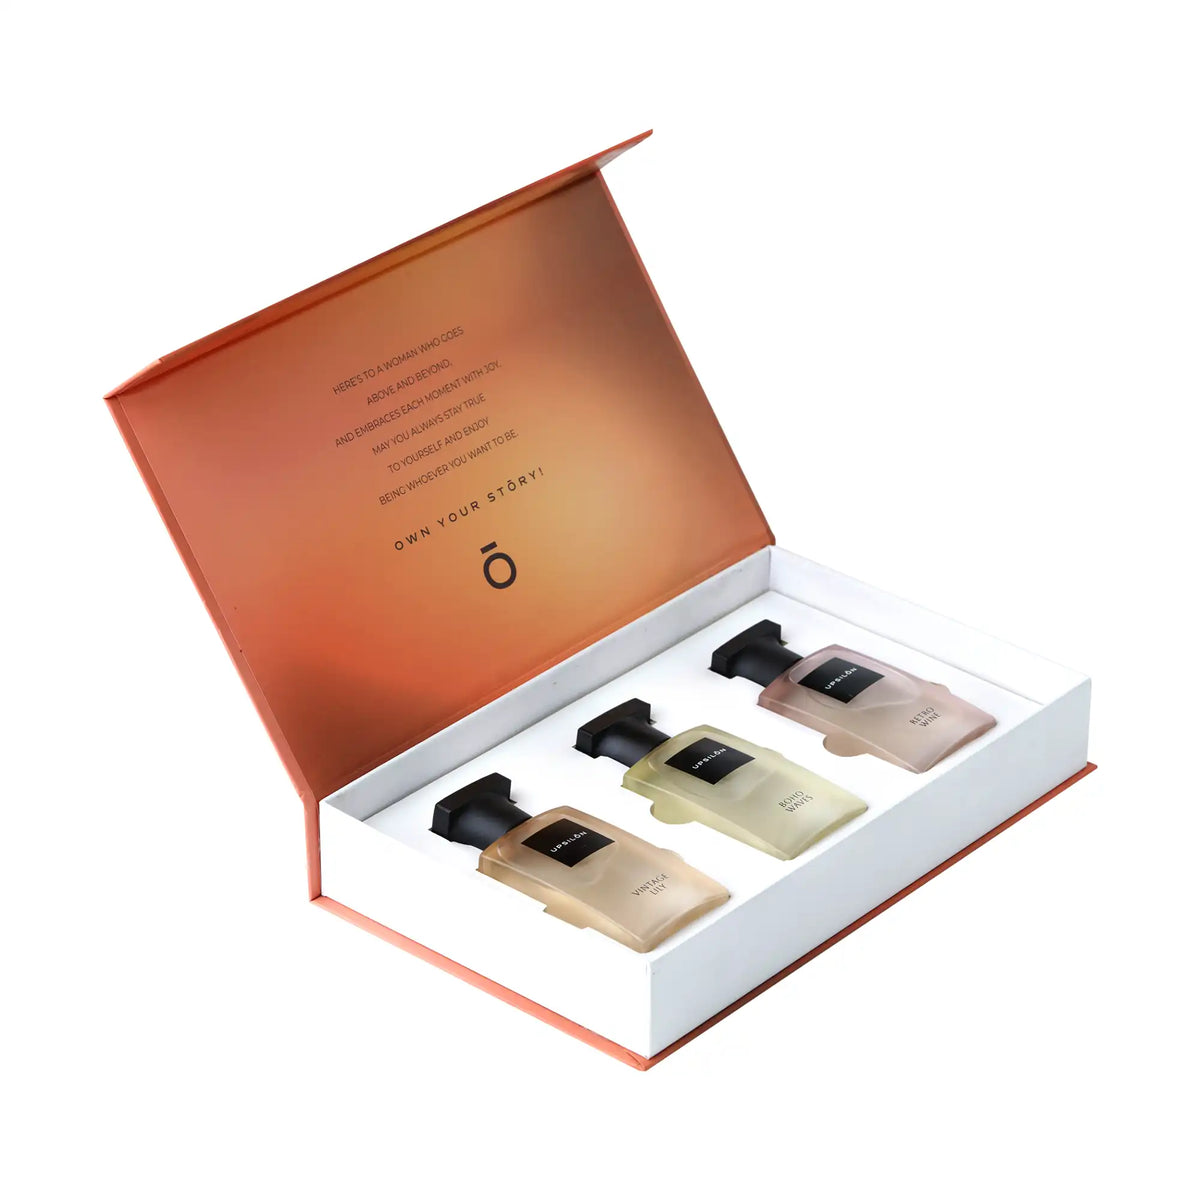 A set of three Upsilon Eau de Parfum bottles in a gift box